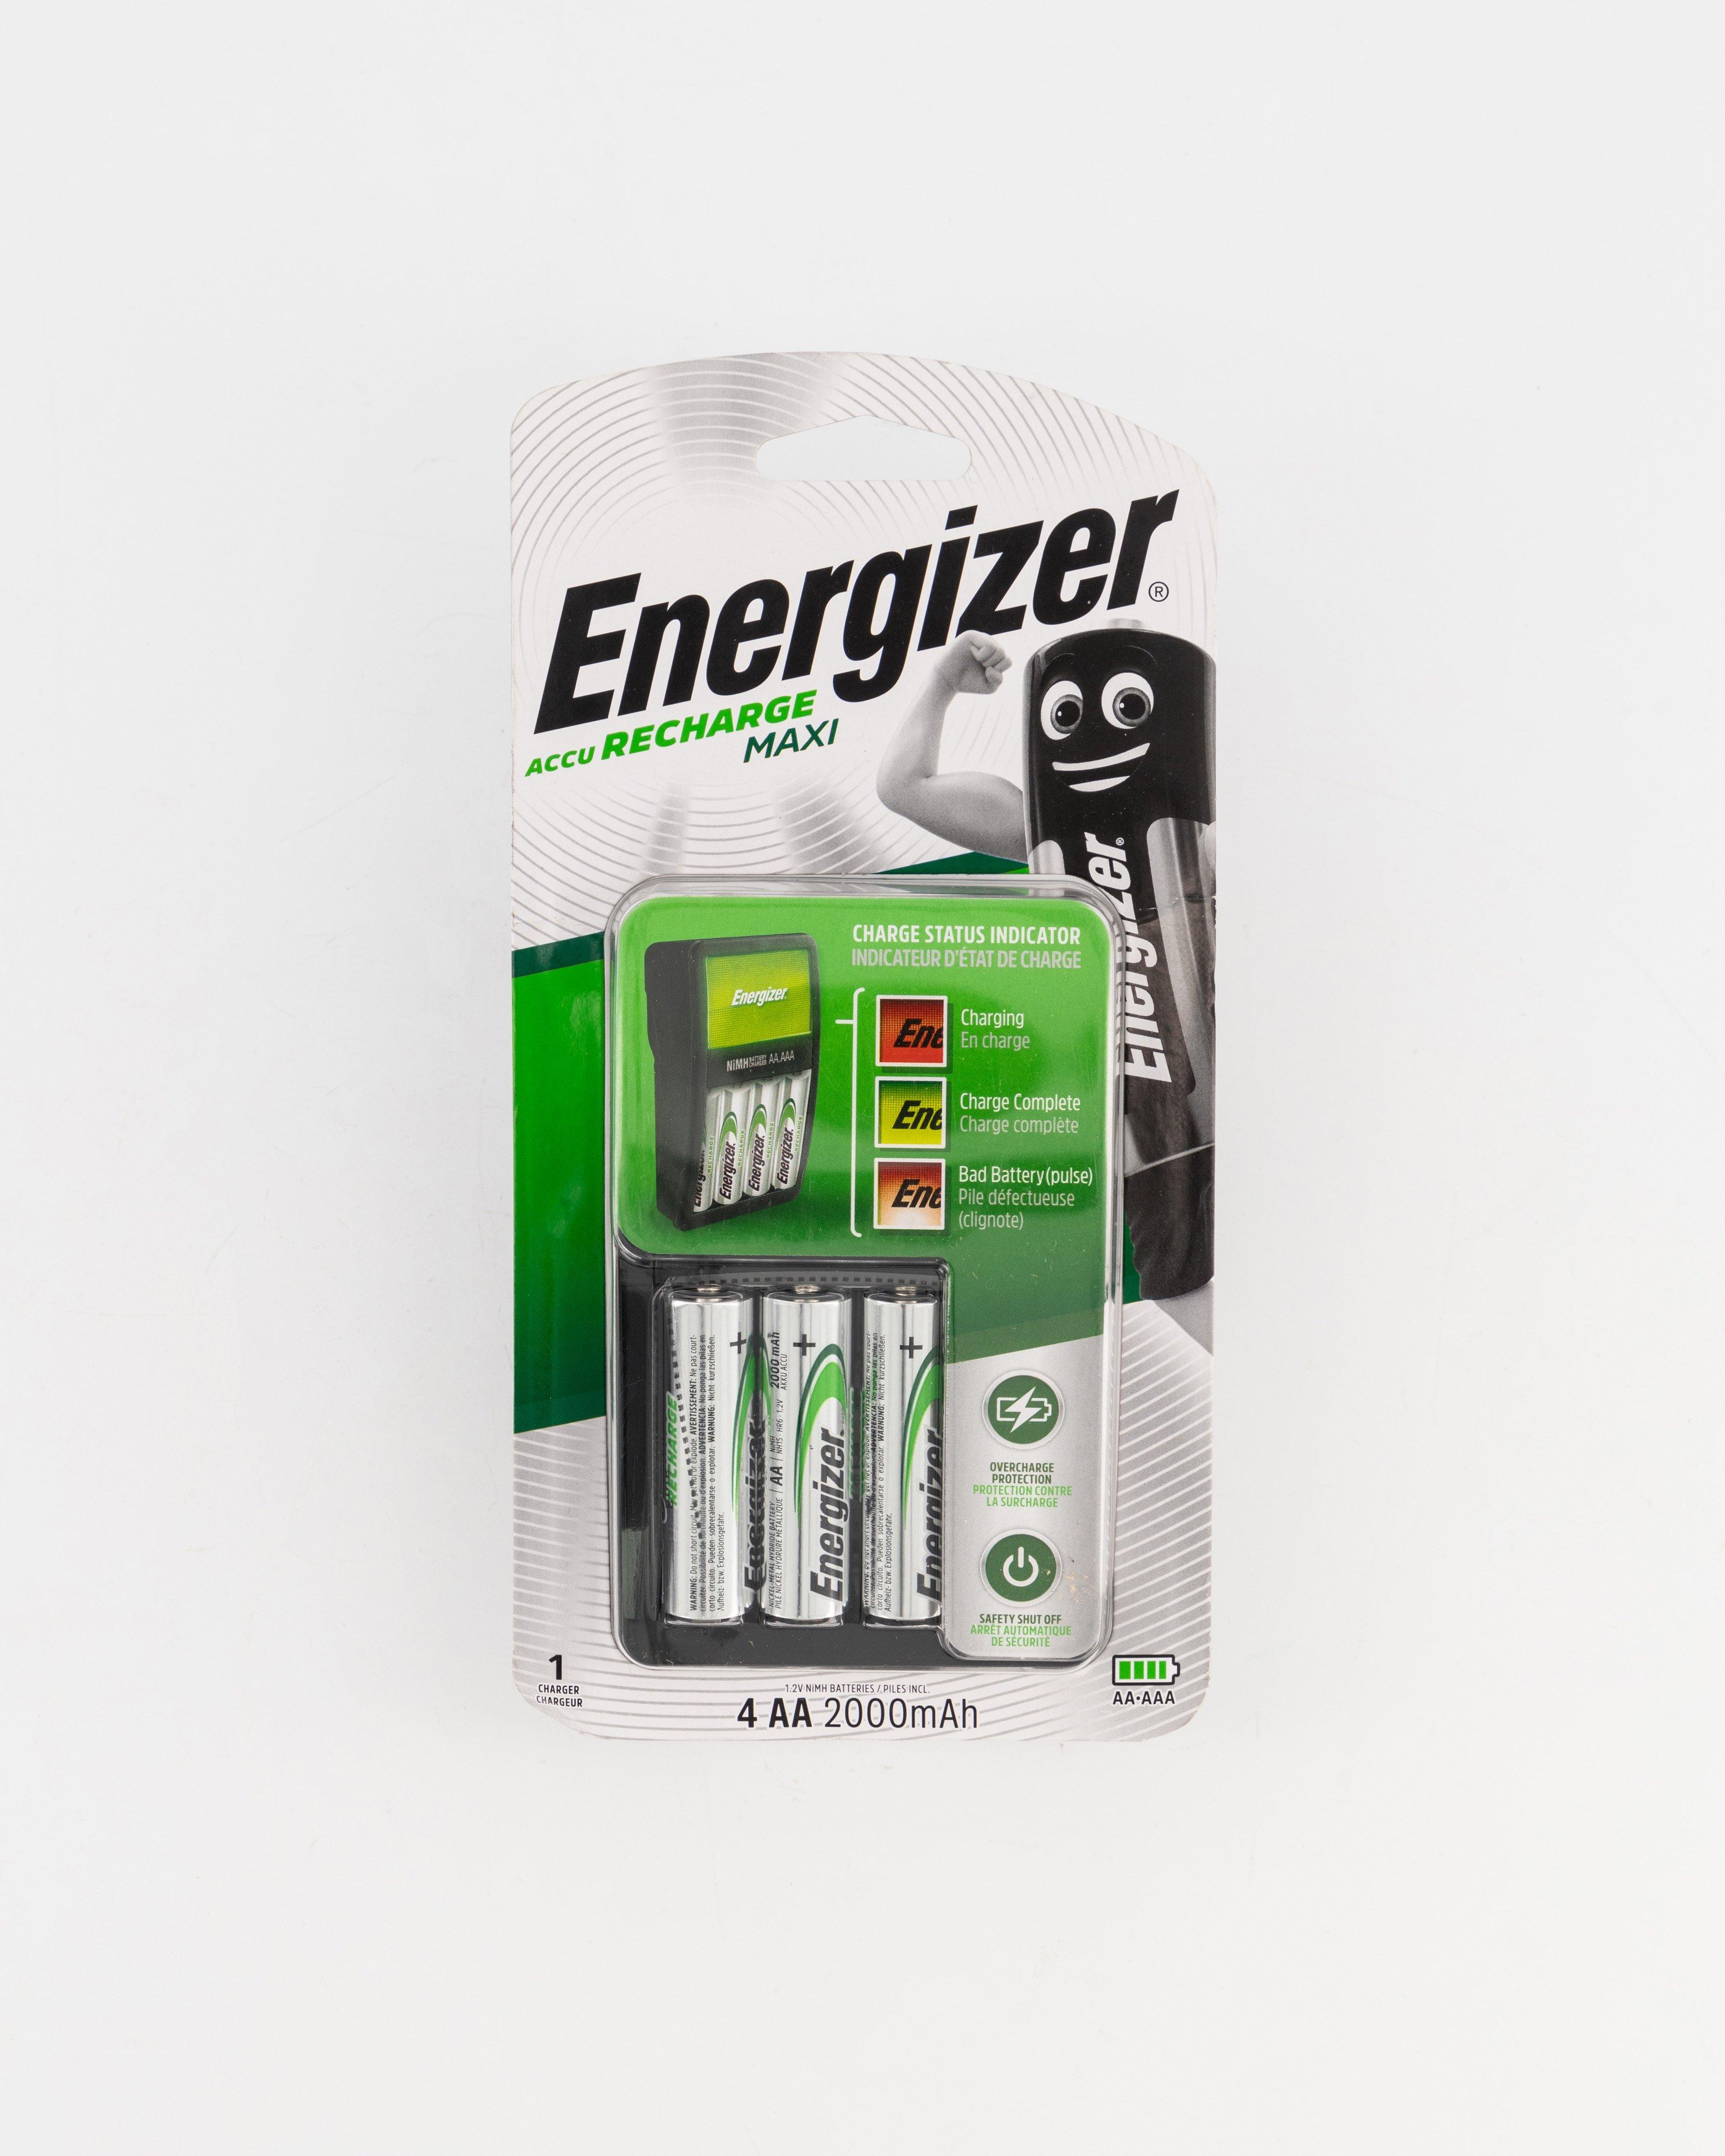 Energizer Maxi Battery Charger -  No Colour